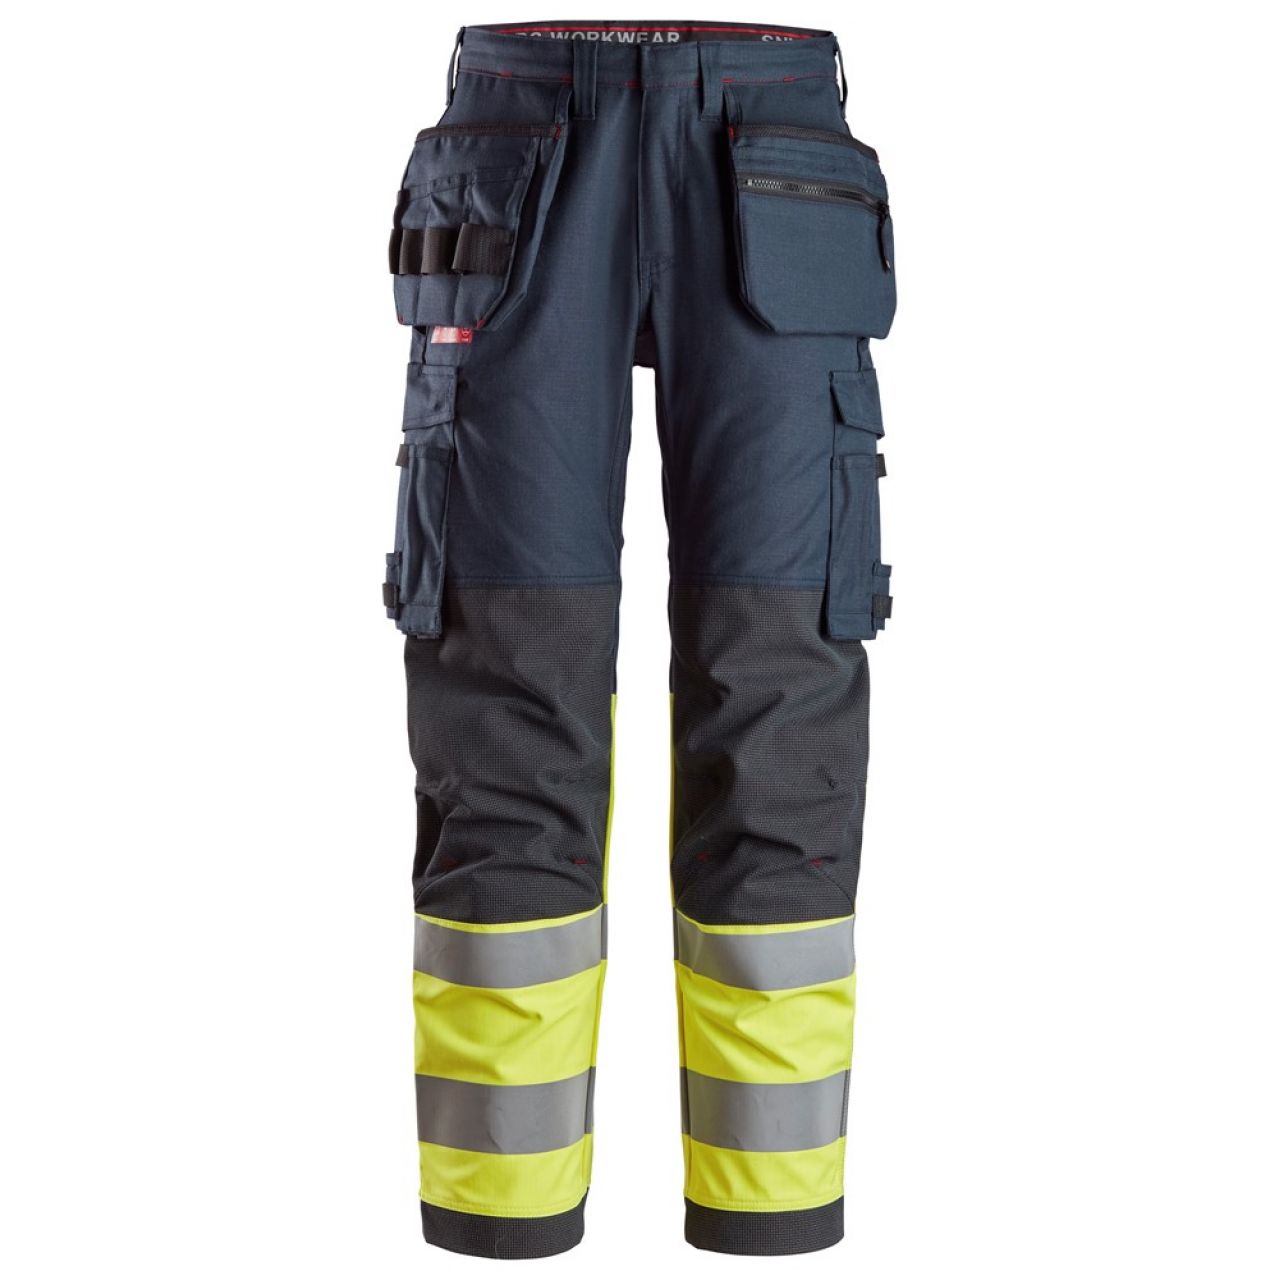 6263 Pantalones largos de trabajo de alta visibilidad clase 1 con bolsillos flotantes ProtecWork azul marino-amarillo talla 92